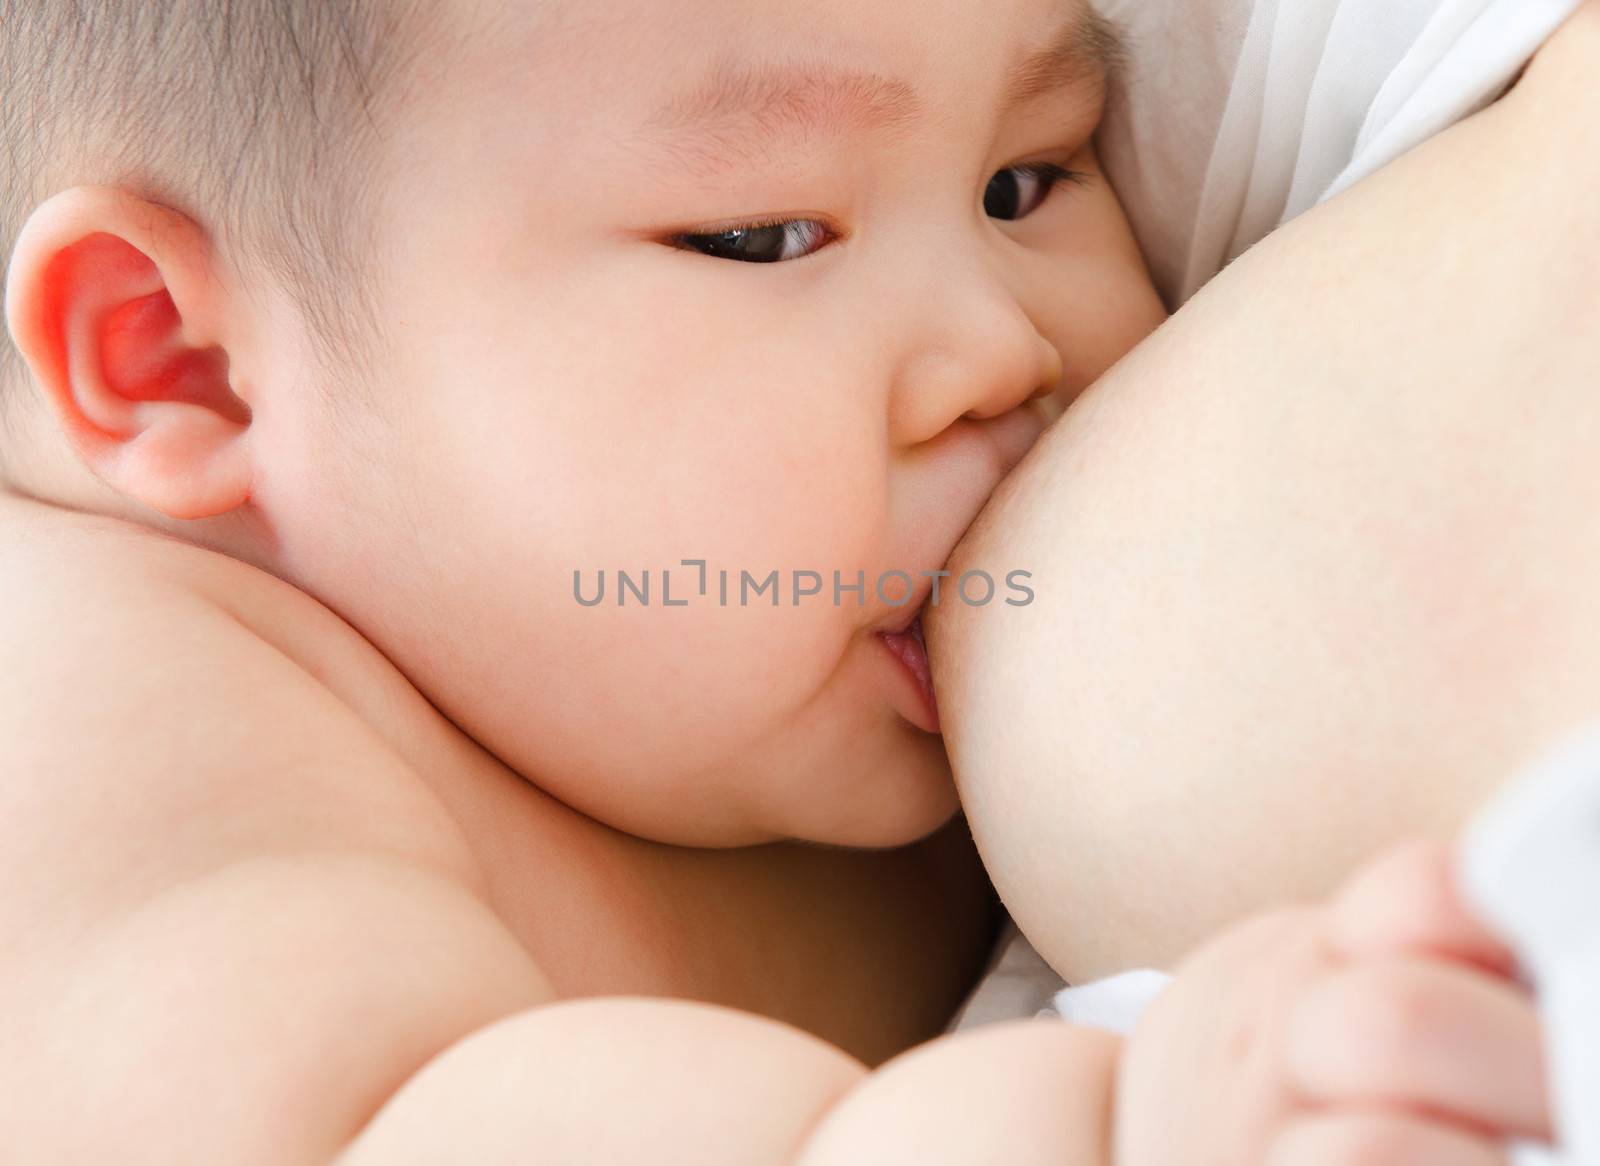 Breast feeding baby by szefei